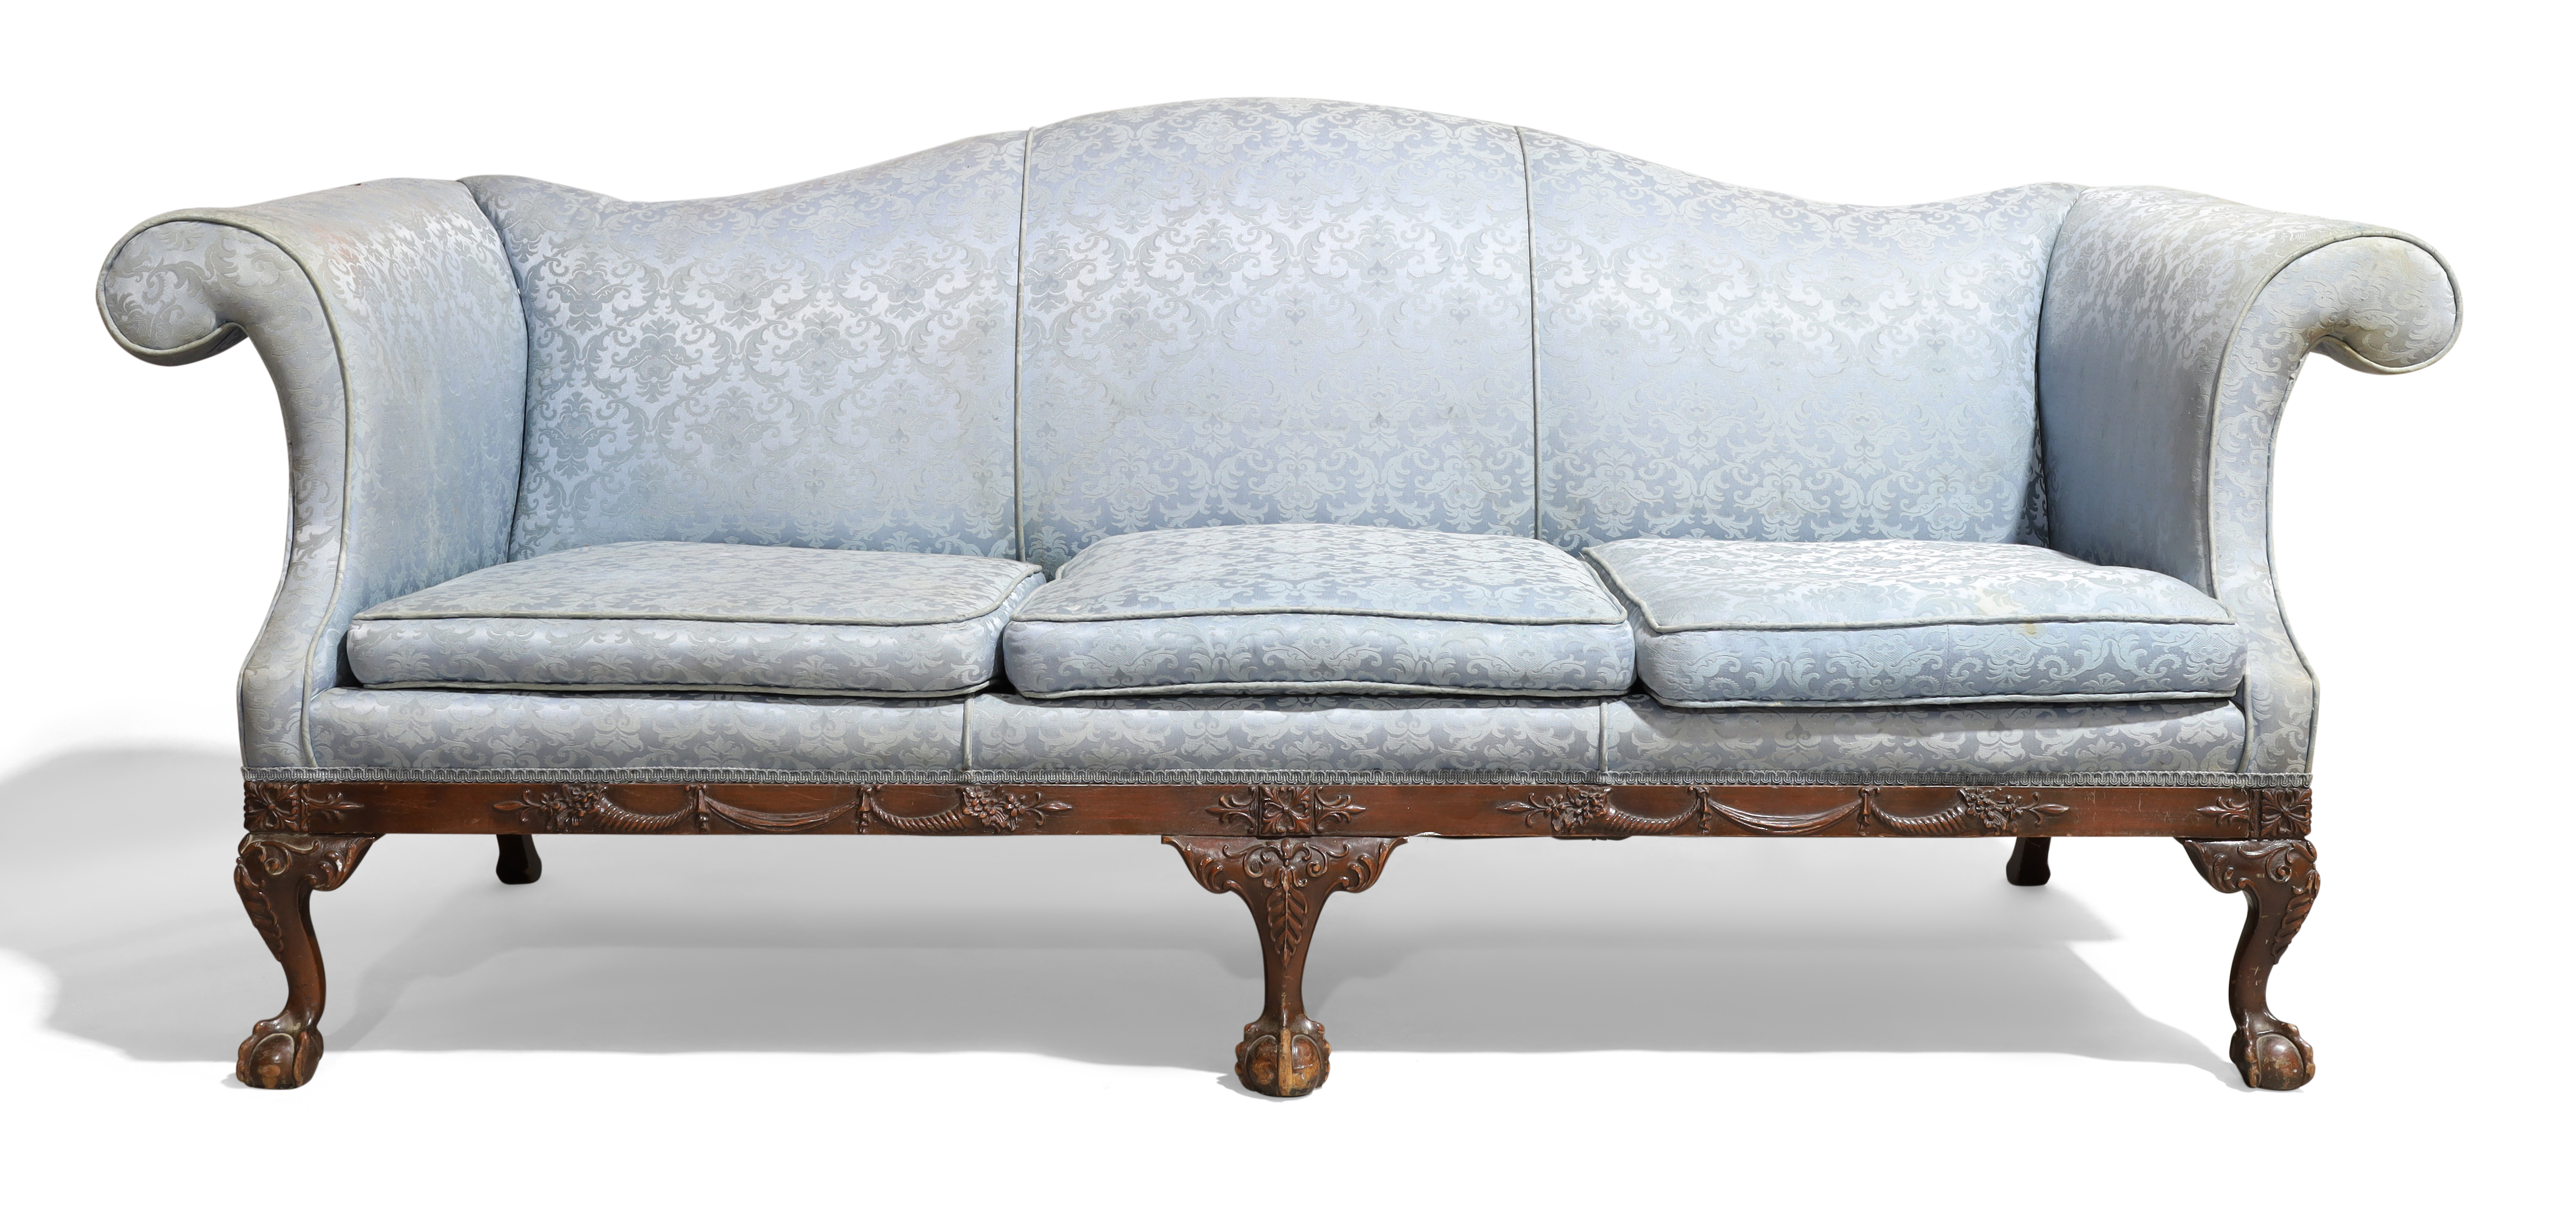 A George III style three seat camel back sofa